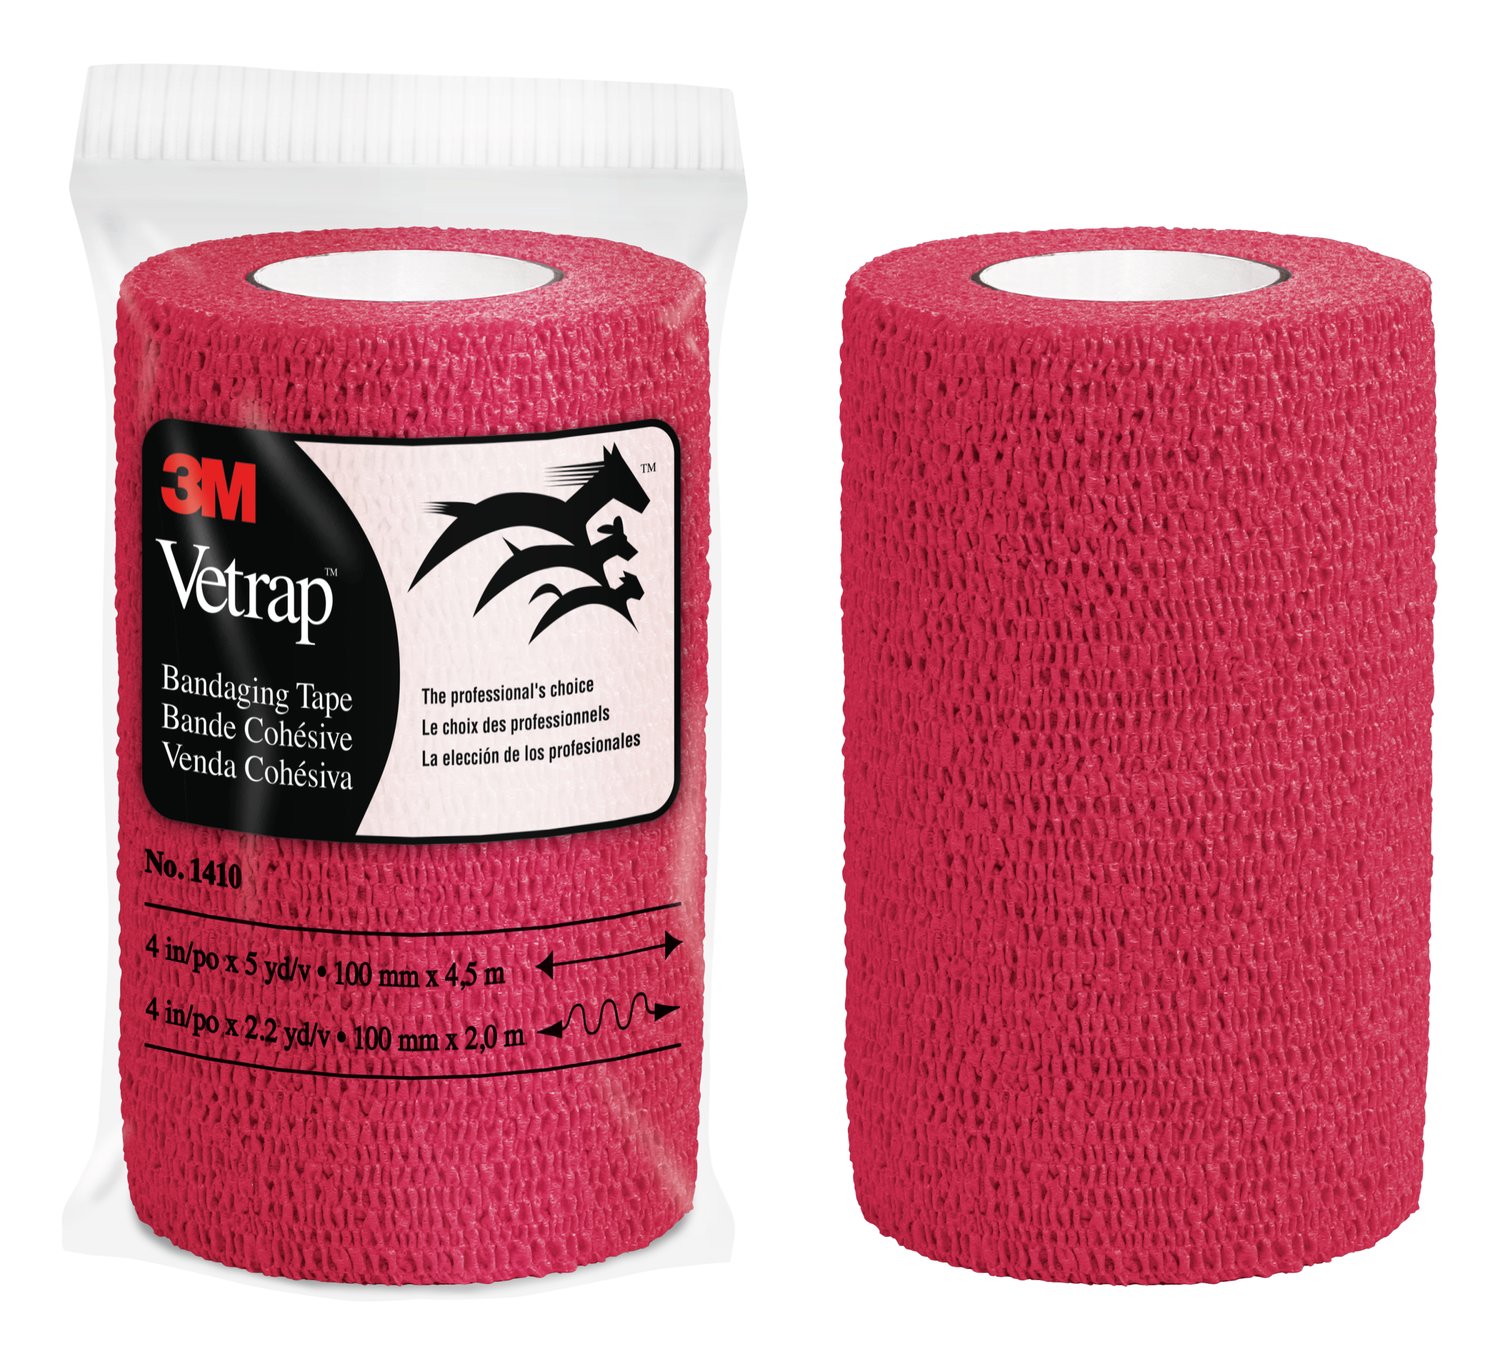 7100295321 - 3M Vetrap Bandaging Tape 1410R-18, Red, 4 inch (10 cm), 18 Roll/Case